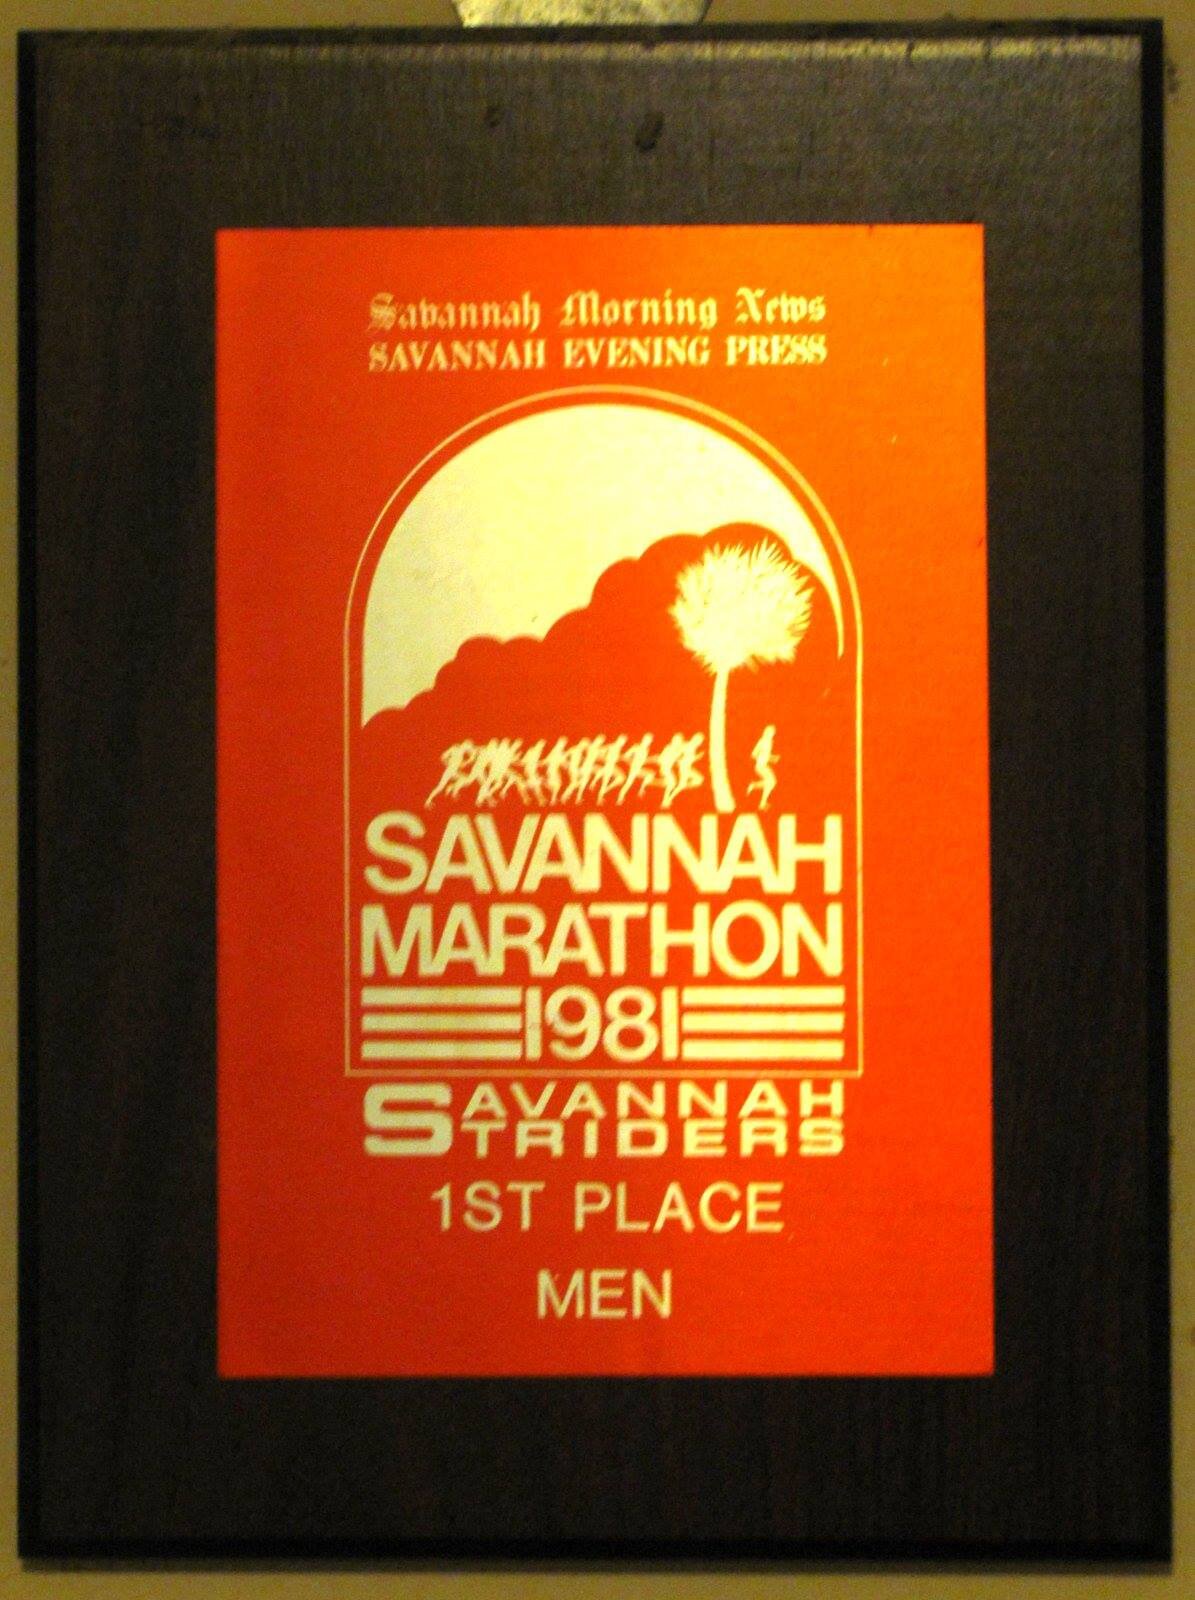 Member Award from 1981